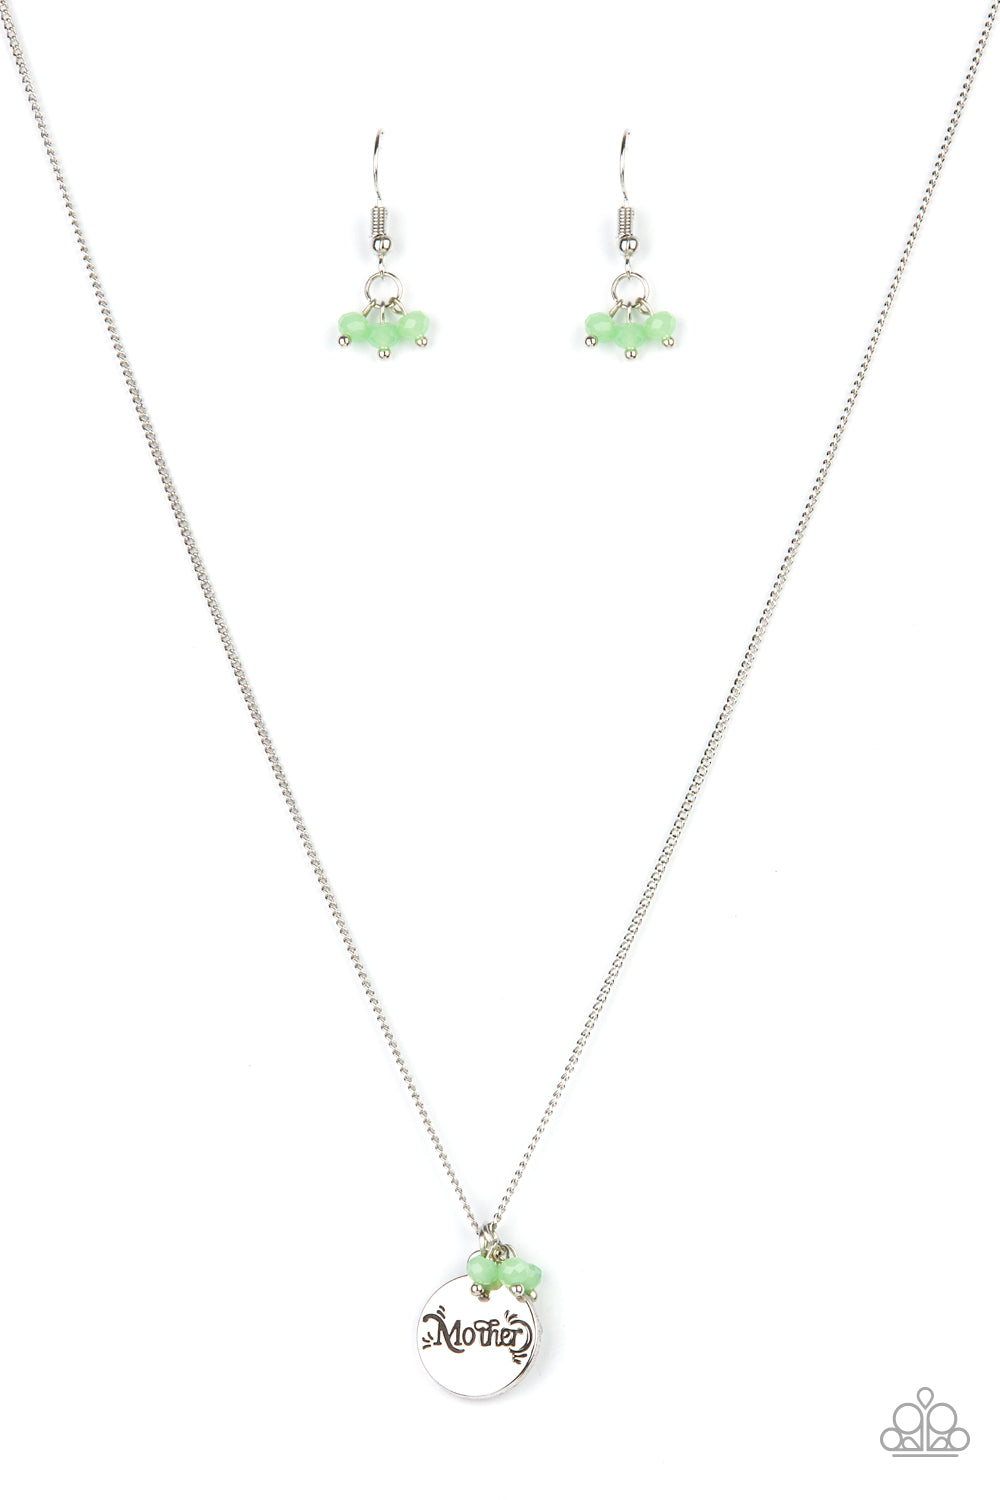 Warm My Heart - Green Necklace Set - Princess Glam Shop